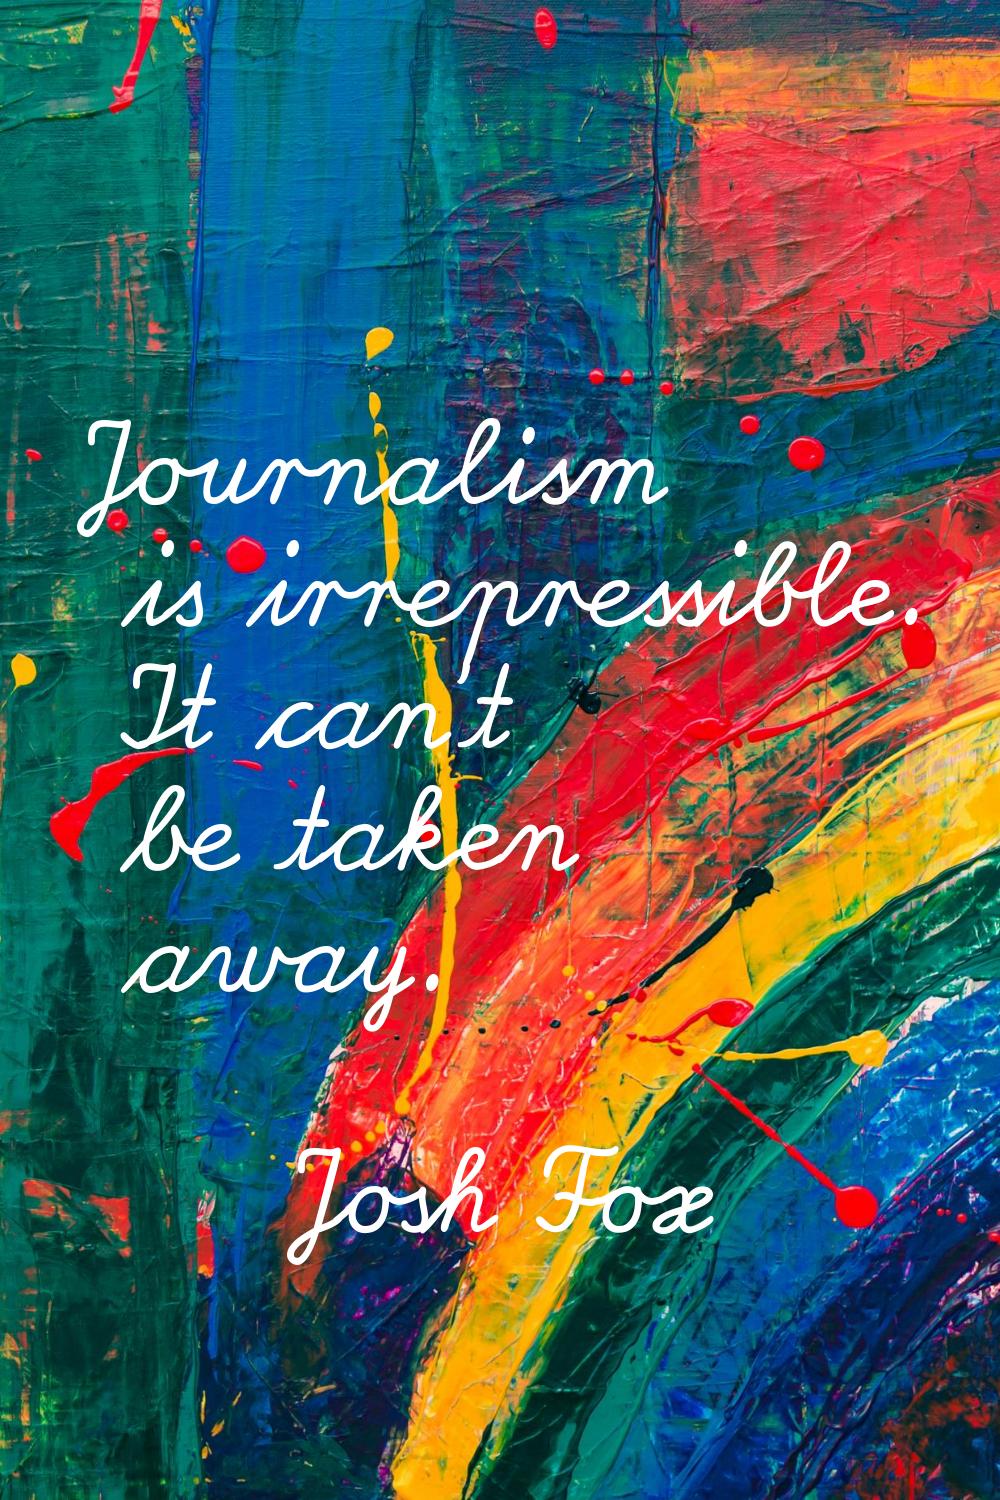 Journalism is irrepressible. It can't be taken away.